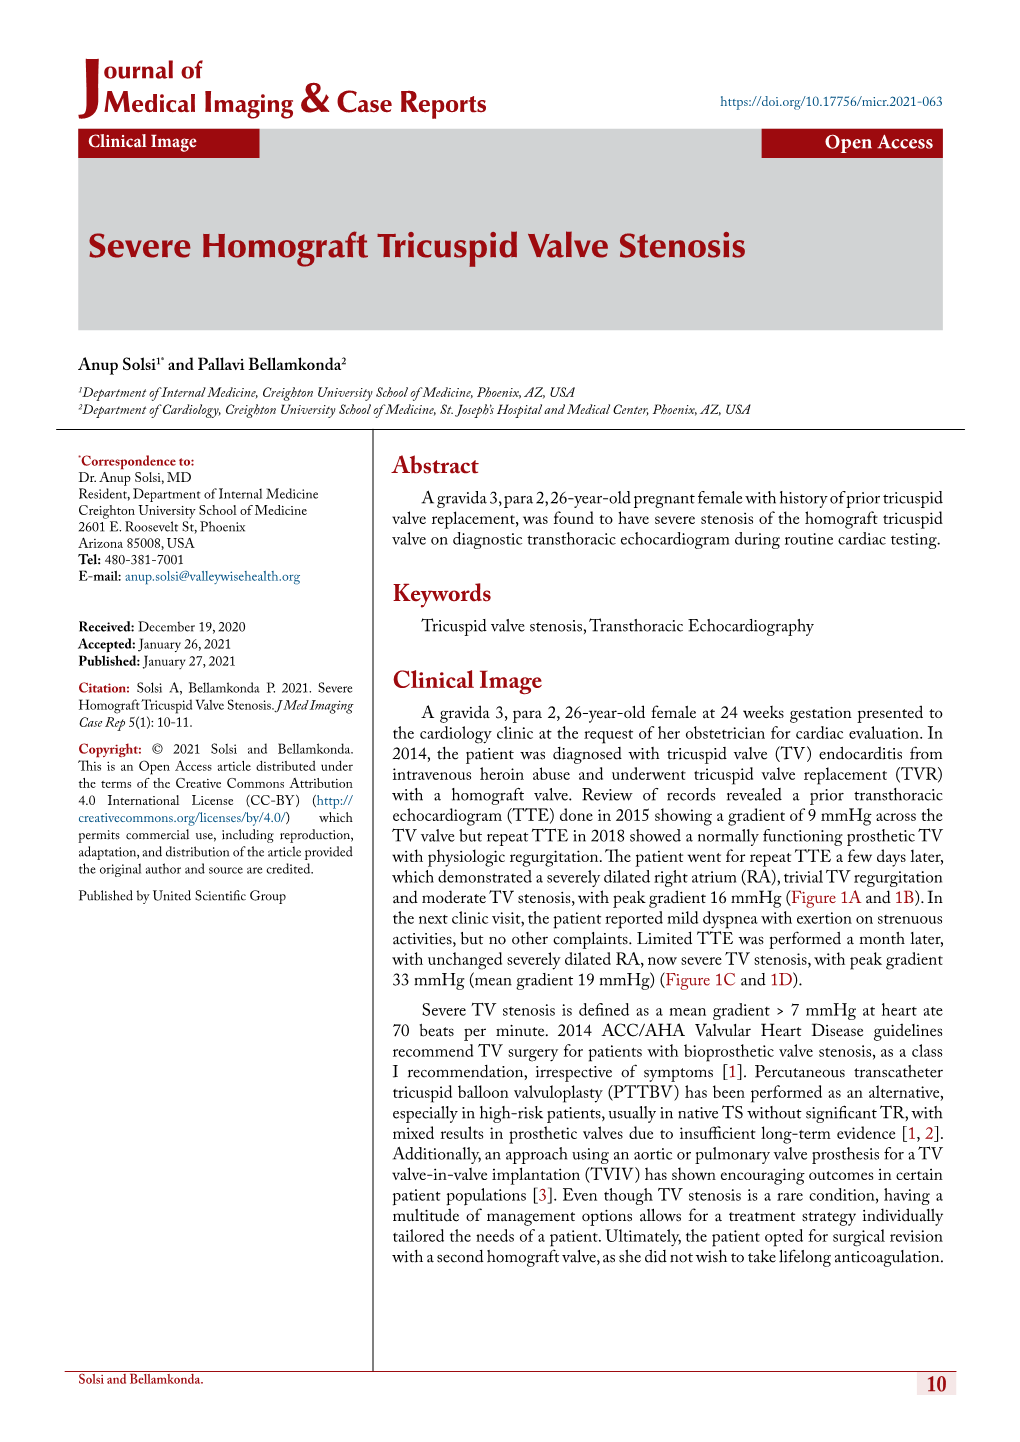 Severe Homograft Tricuspid Valve Stenosis